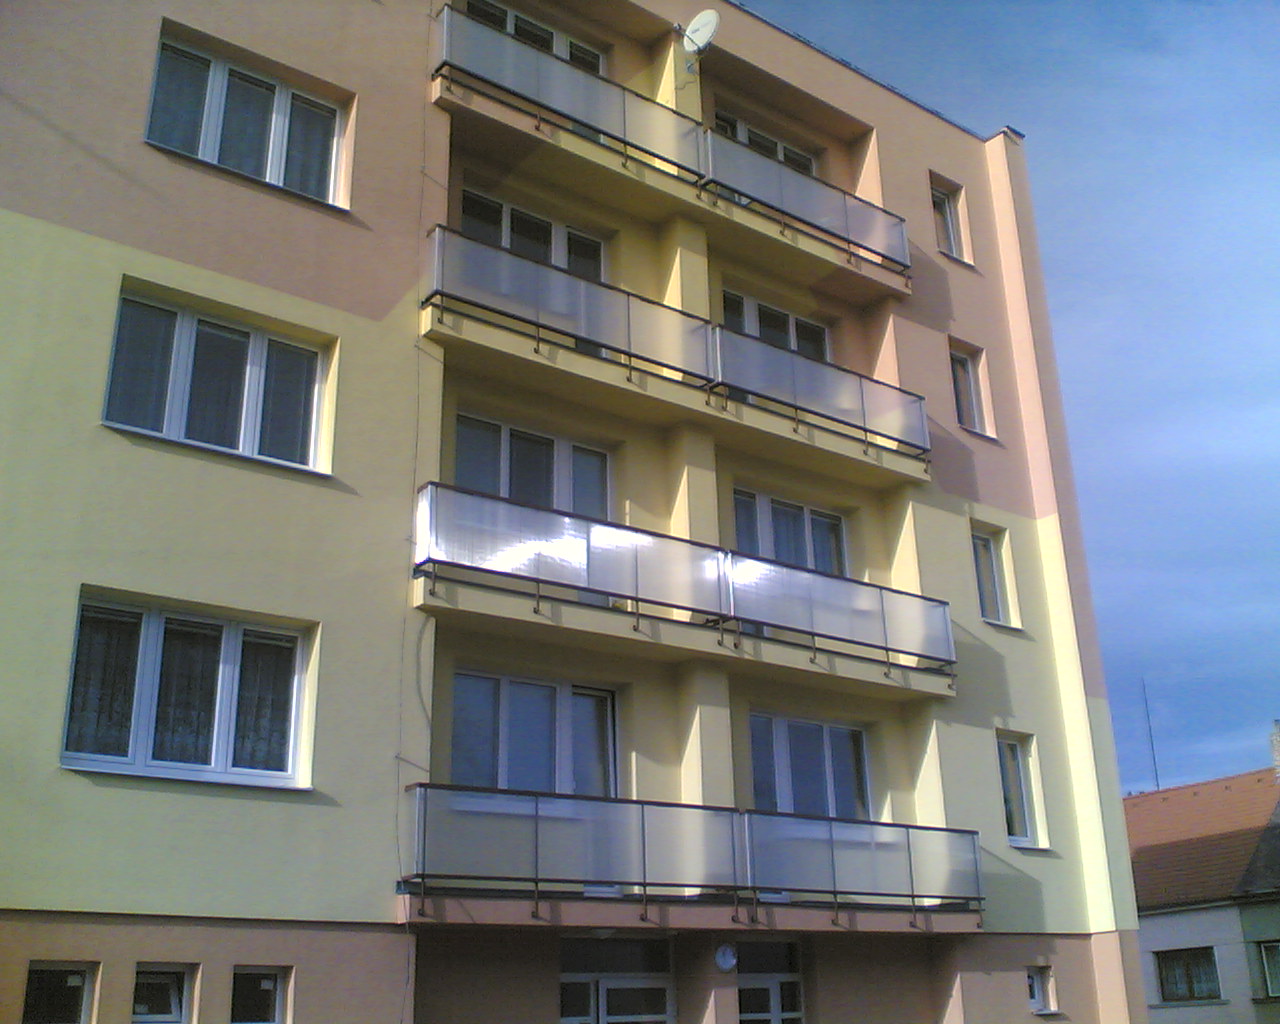 Balkóny - Lišov.